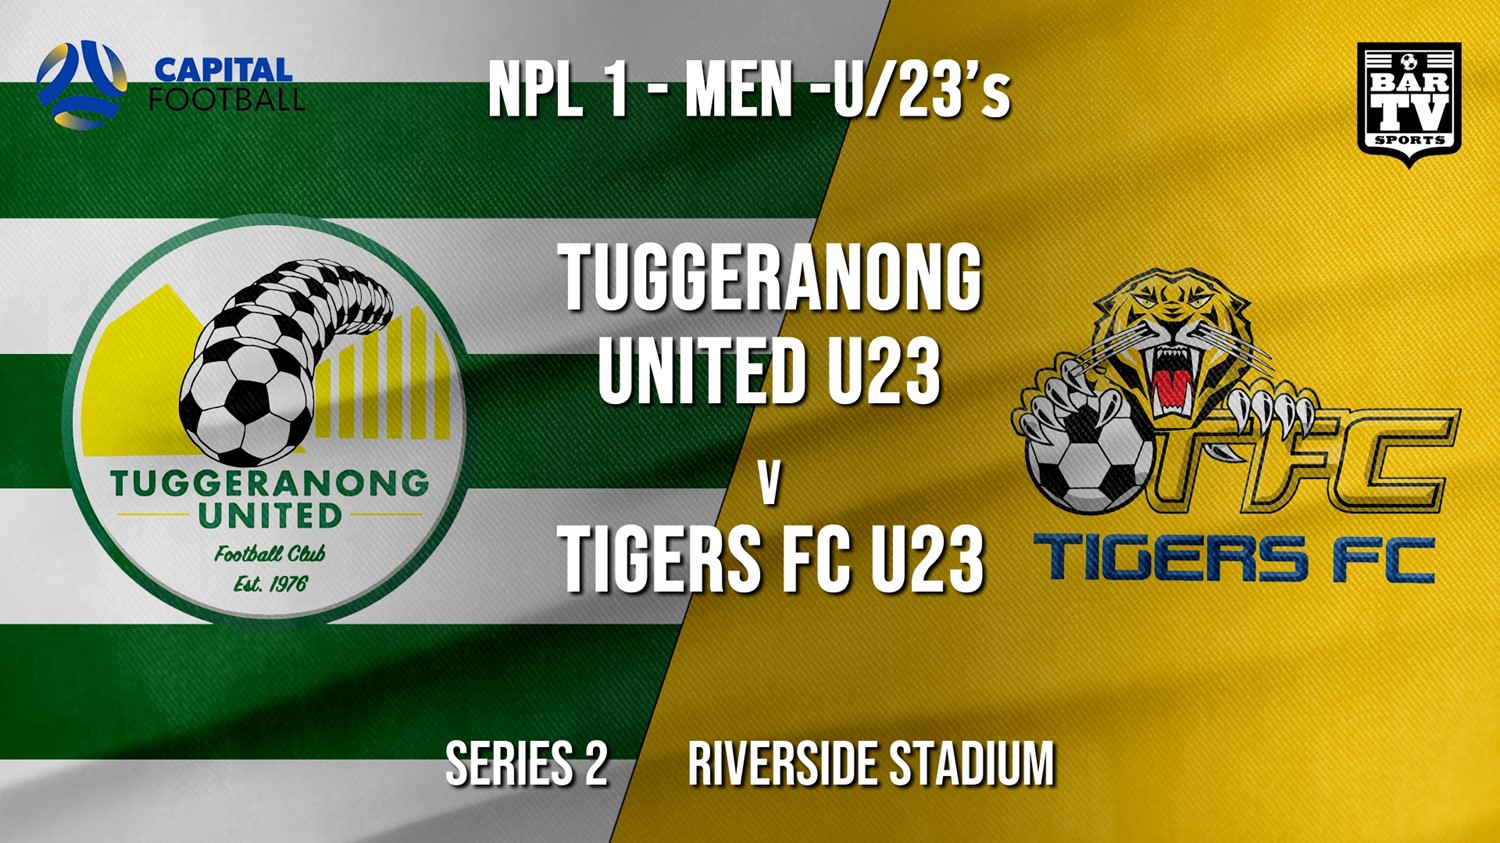 NPL1 Men - U23 - Capital Football  Series 2 - Tuggeranong United U23 v Tigers FC U23 Minigame Slate Image